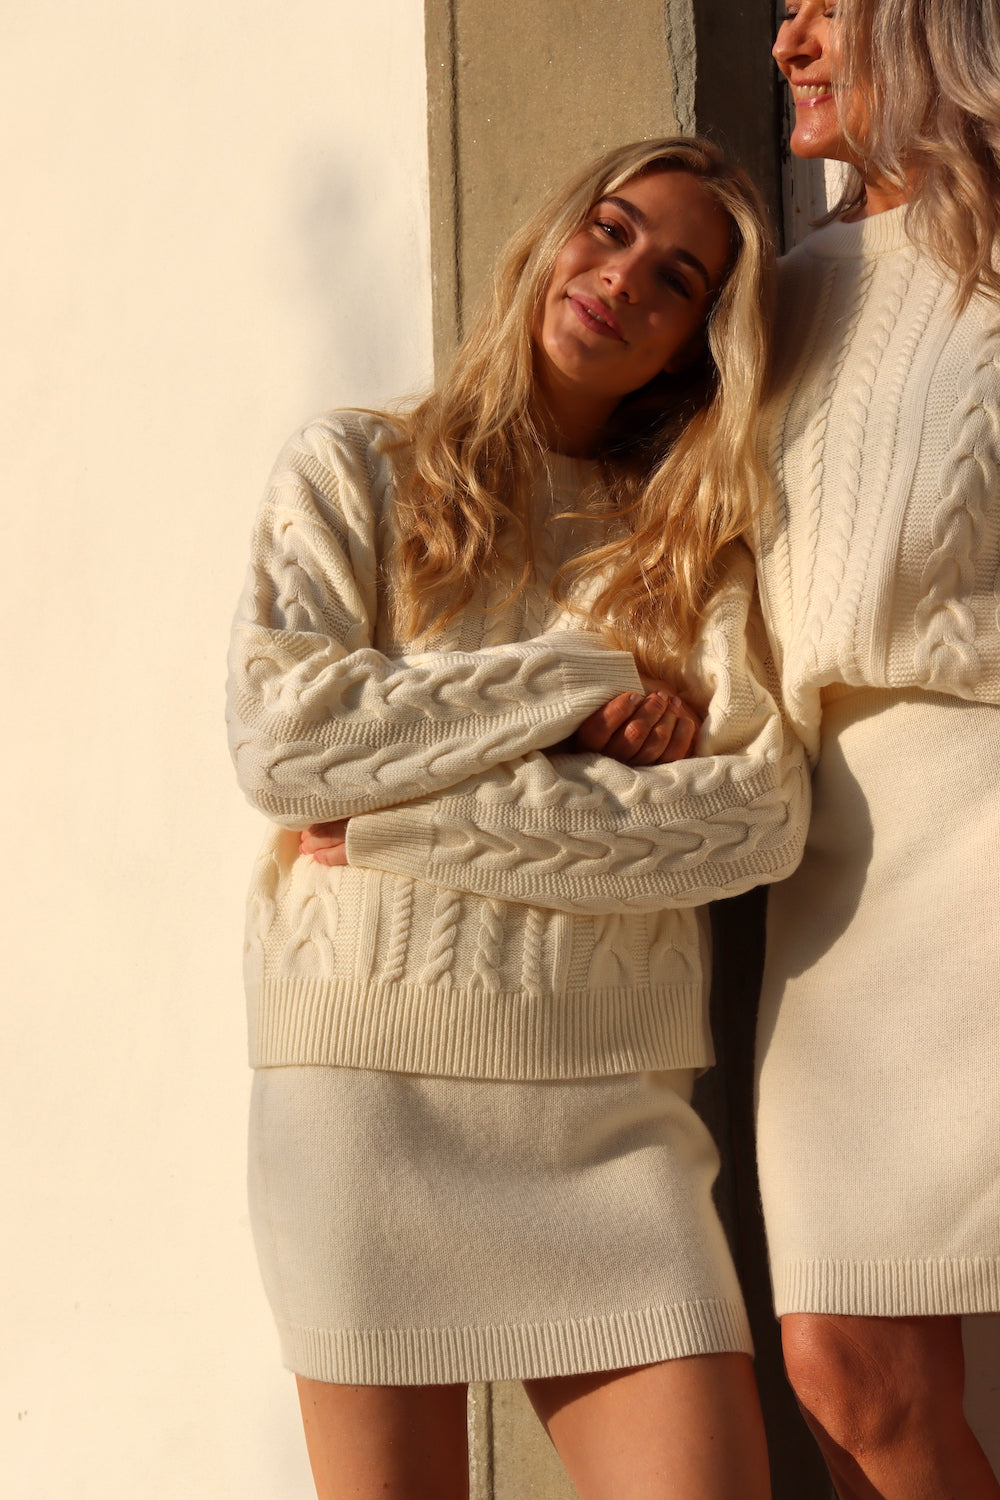 O'TAY Gemma Sweater Bluser Off White